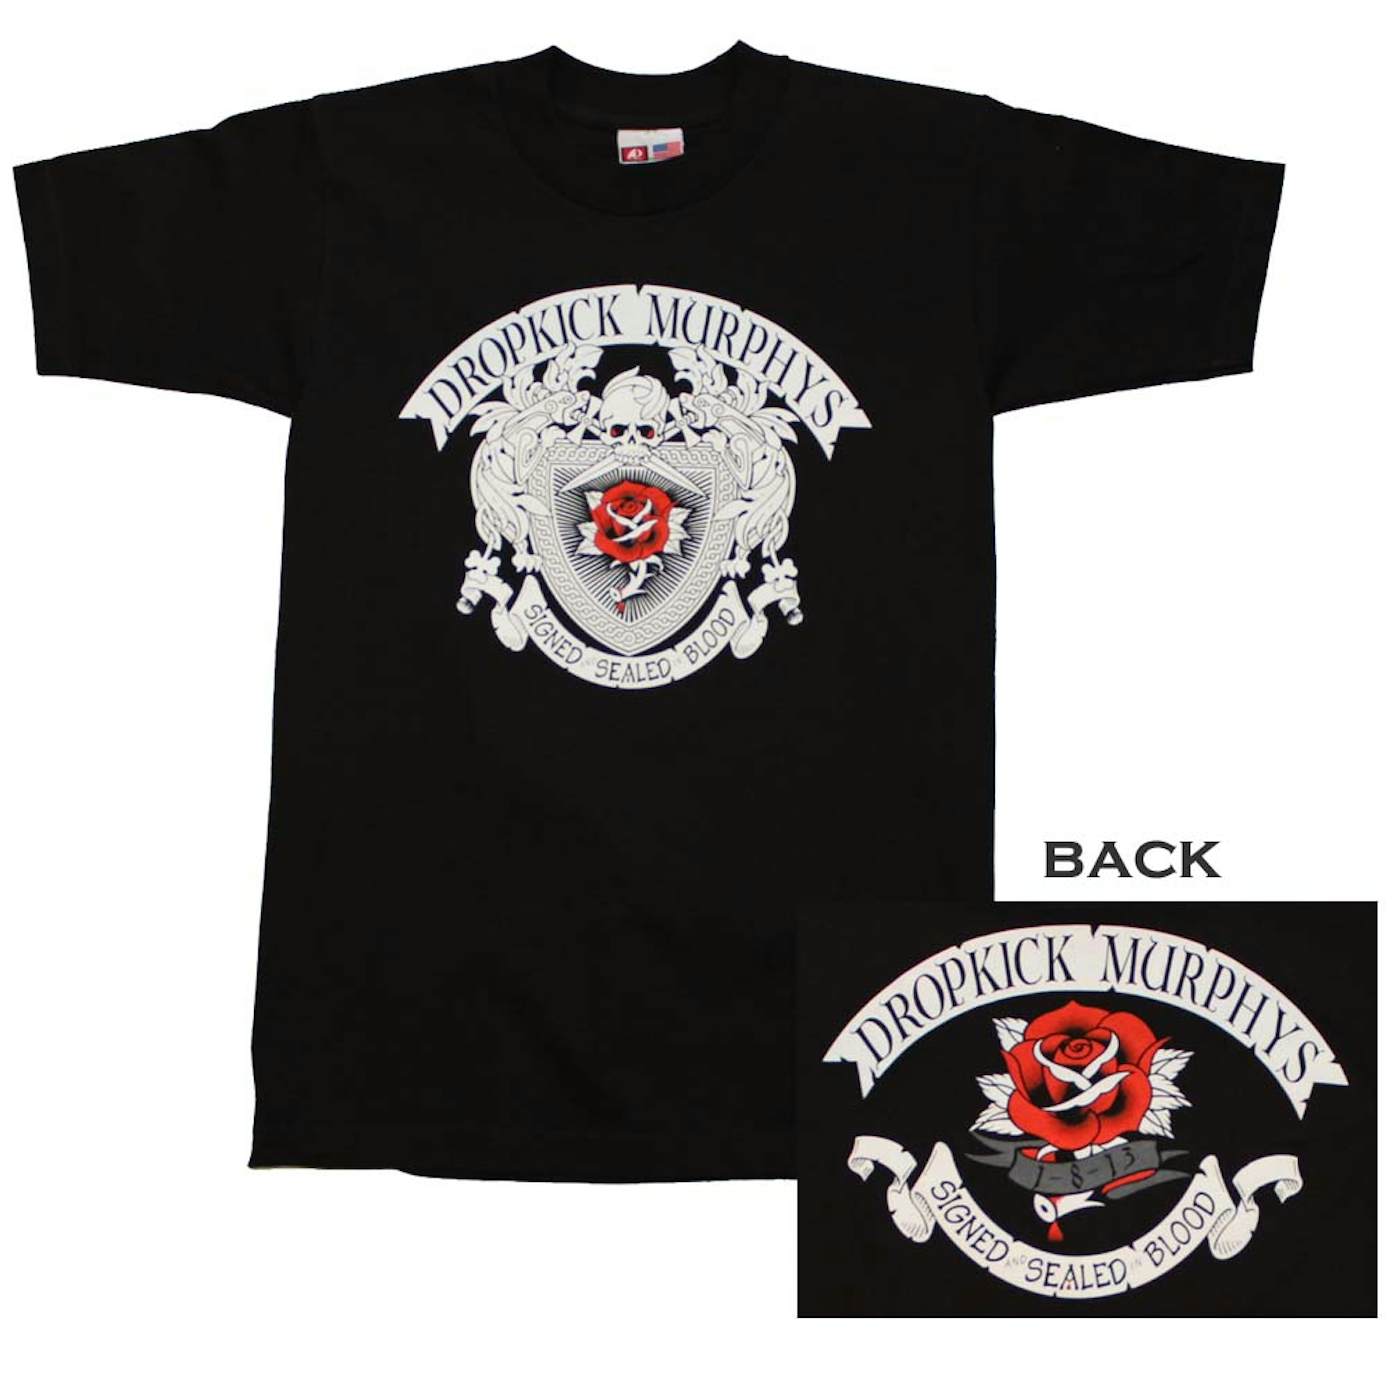 Dropkick Murphys T Shirt | Dropkick Murphys Signed and Sealed T-Shirt